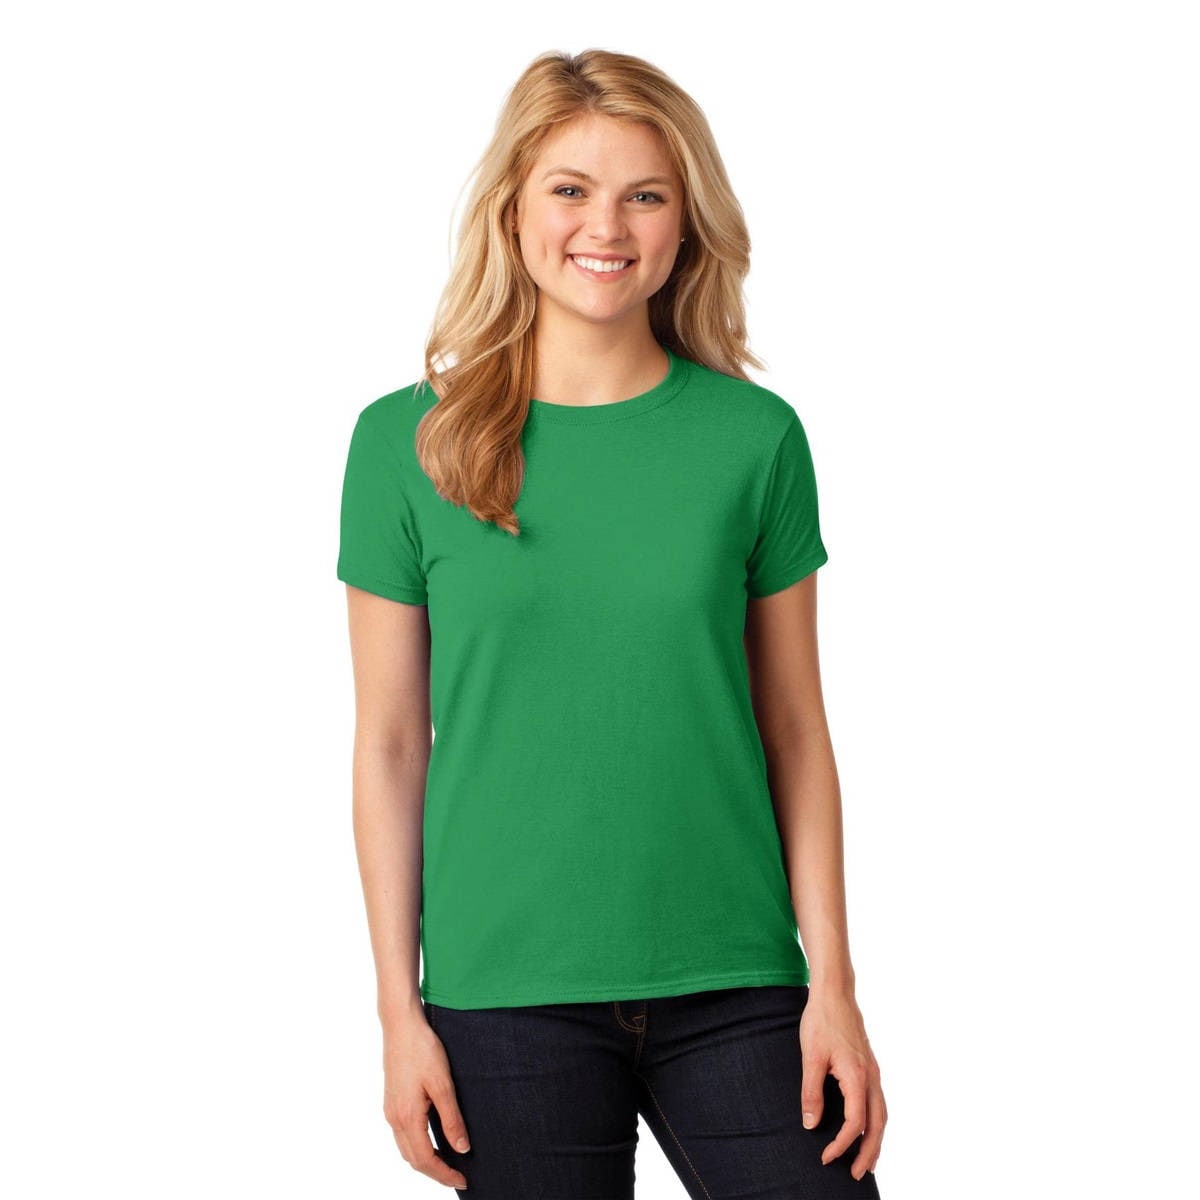 Women's St. Patricks Day Shirt, Lucky Mama, Lucky Shirt, Shamrock, Green Shirt, Irish Tee, Funny